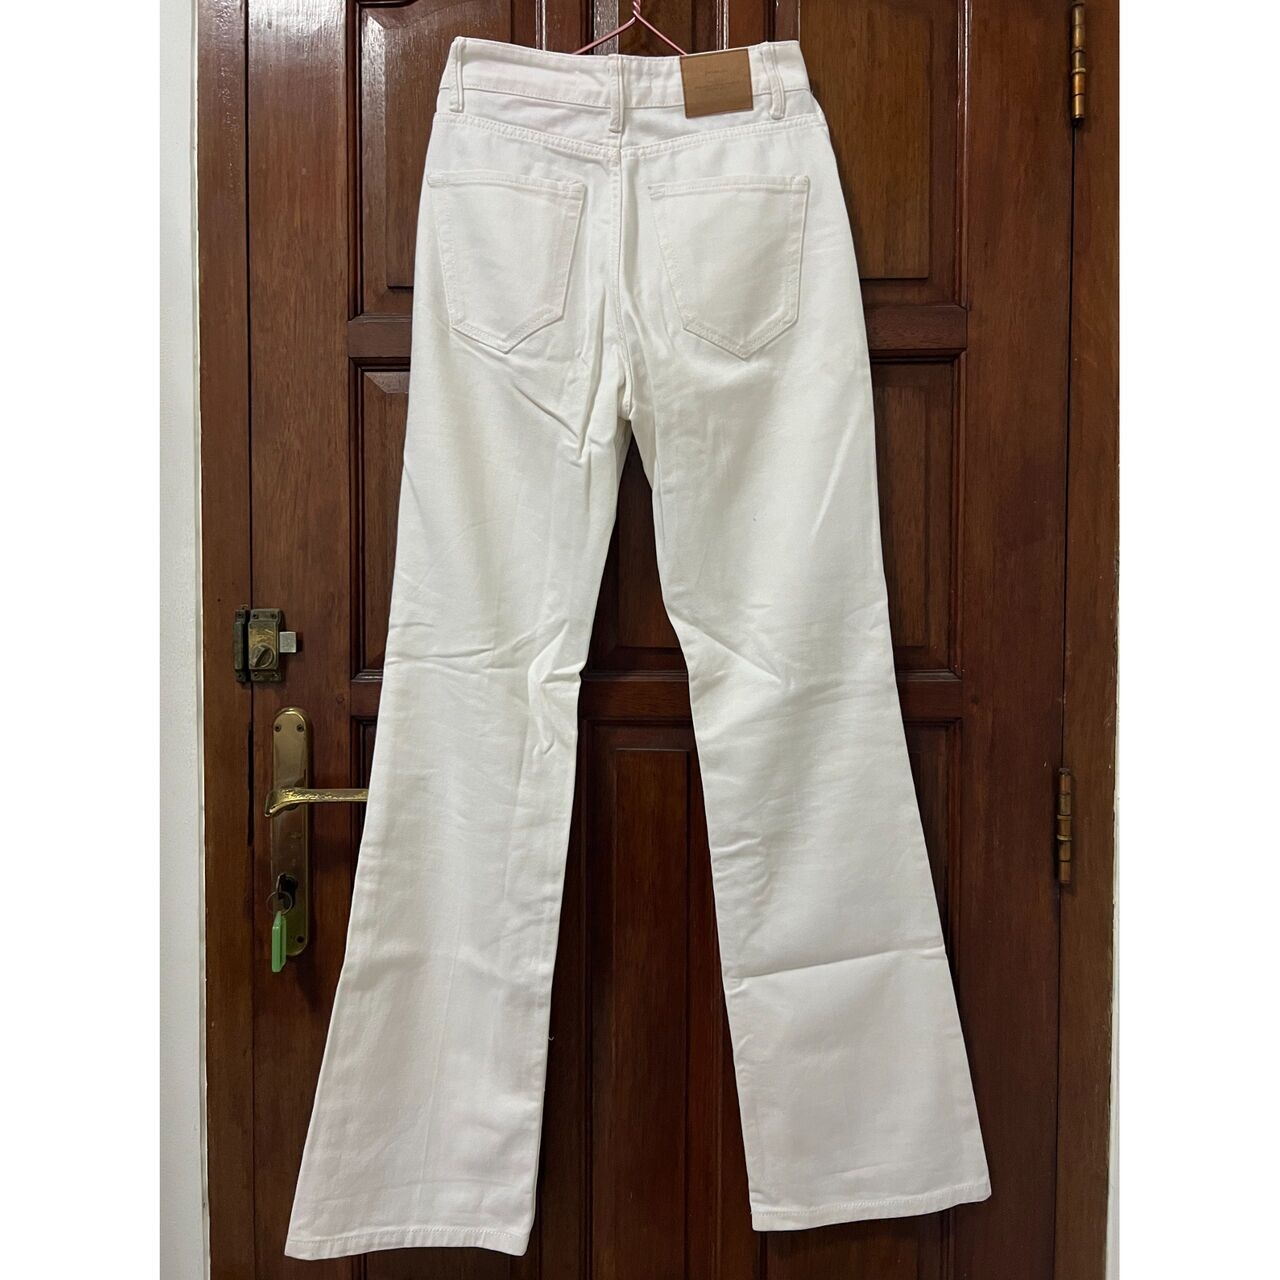 Stradivarius White Long Pants